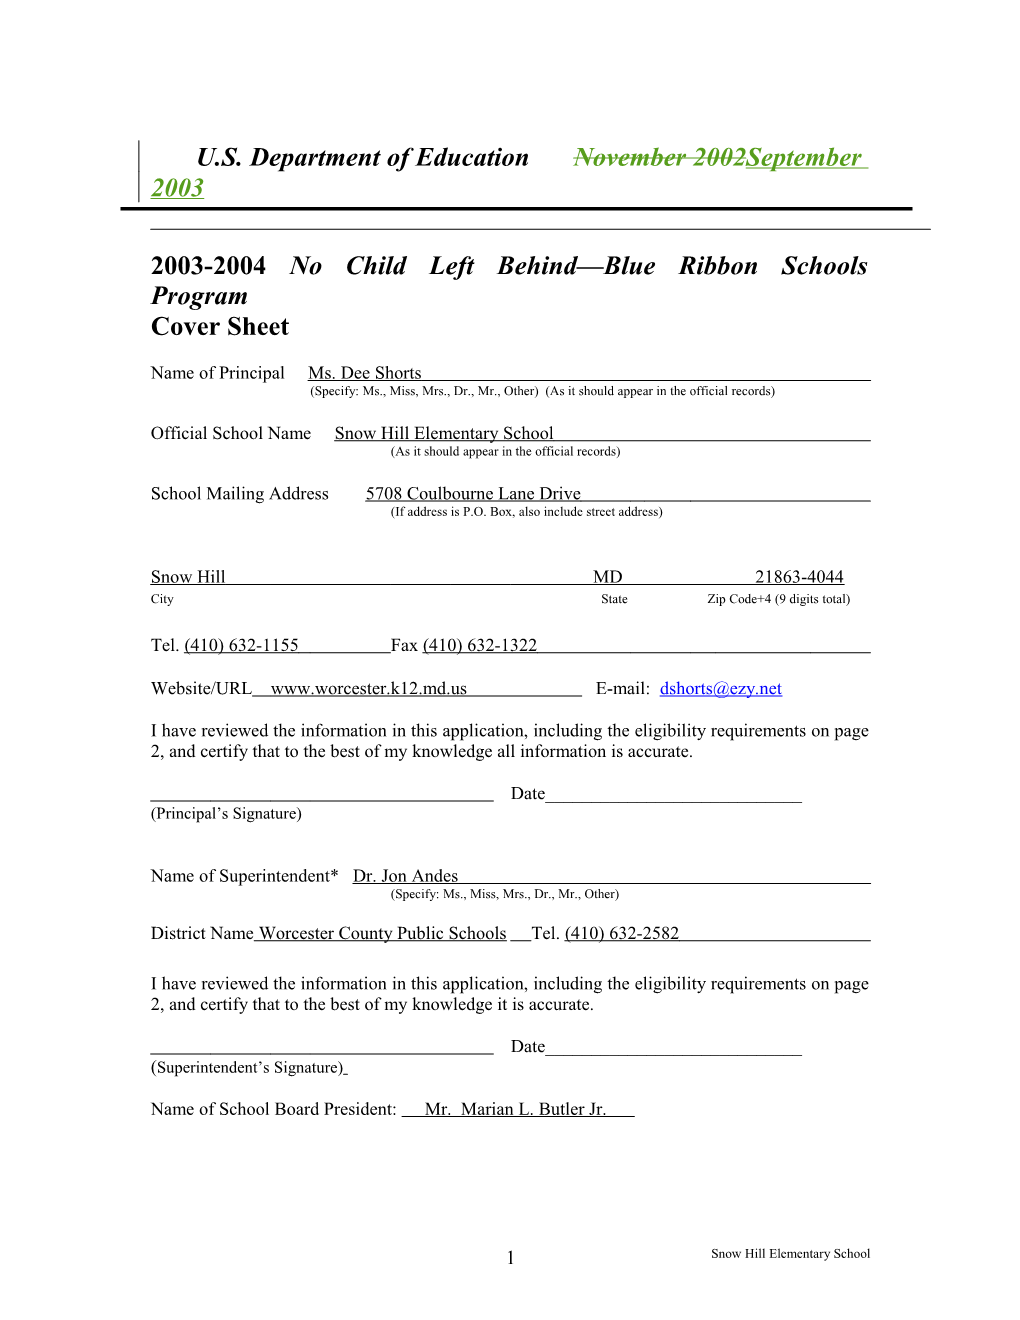 Snow Hill Elementary School 2004 No Child Left Behind-Blue Ribbon School Application (Msword)